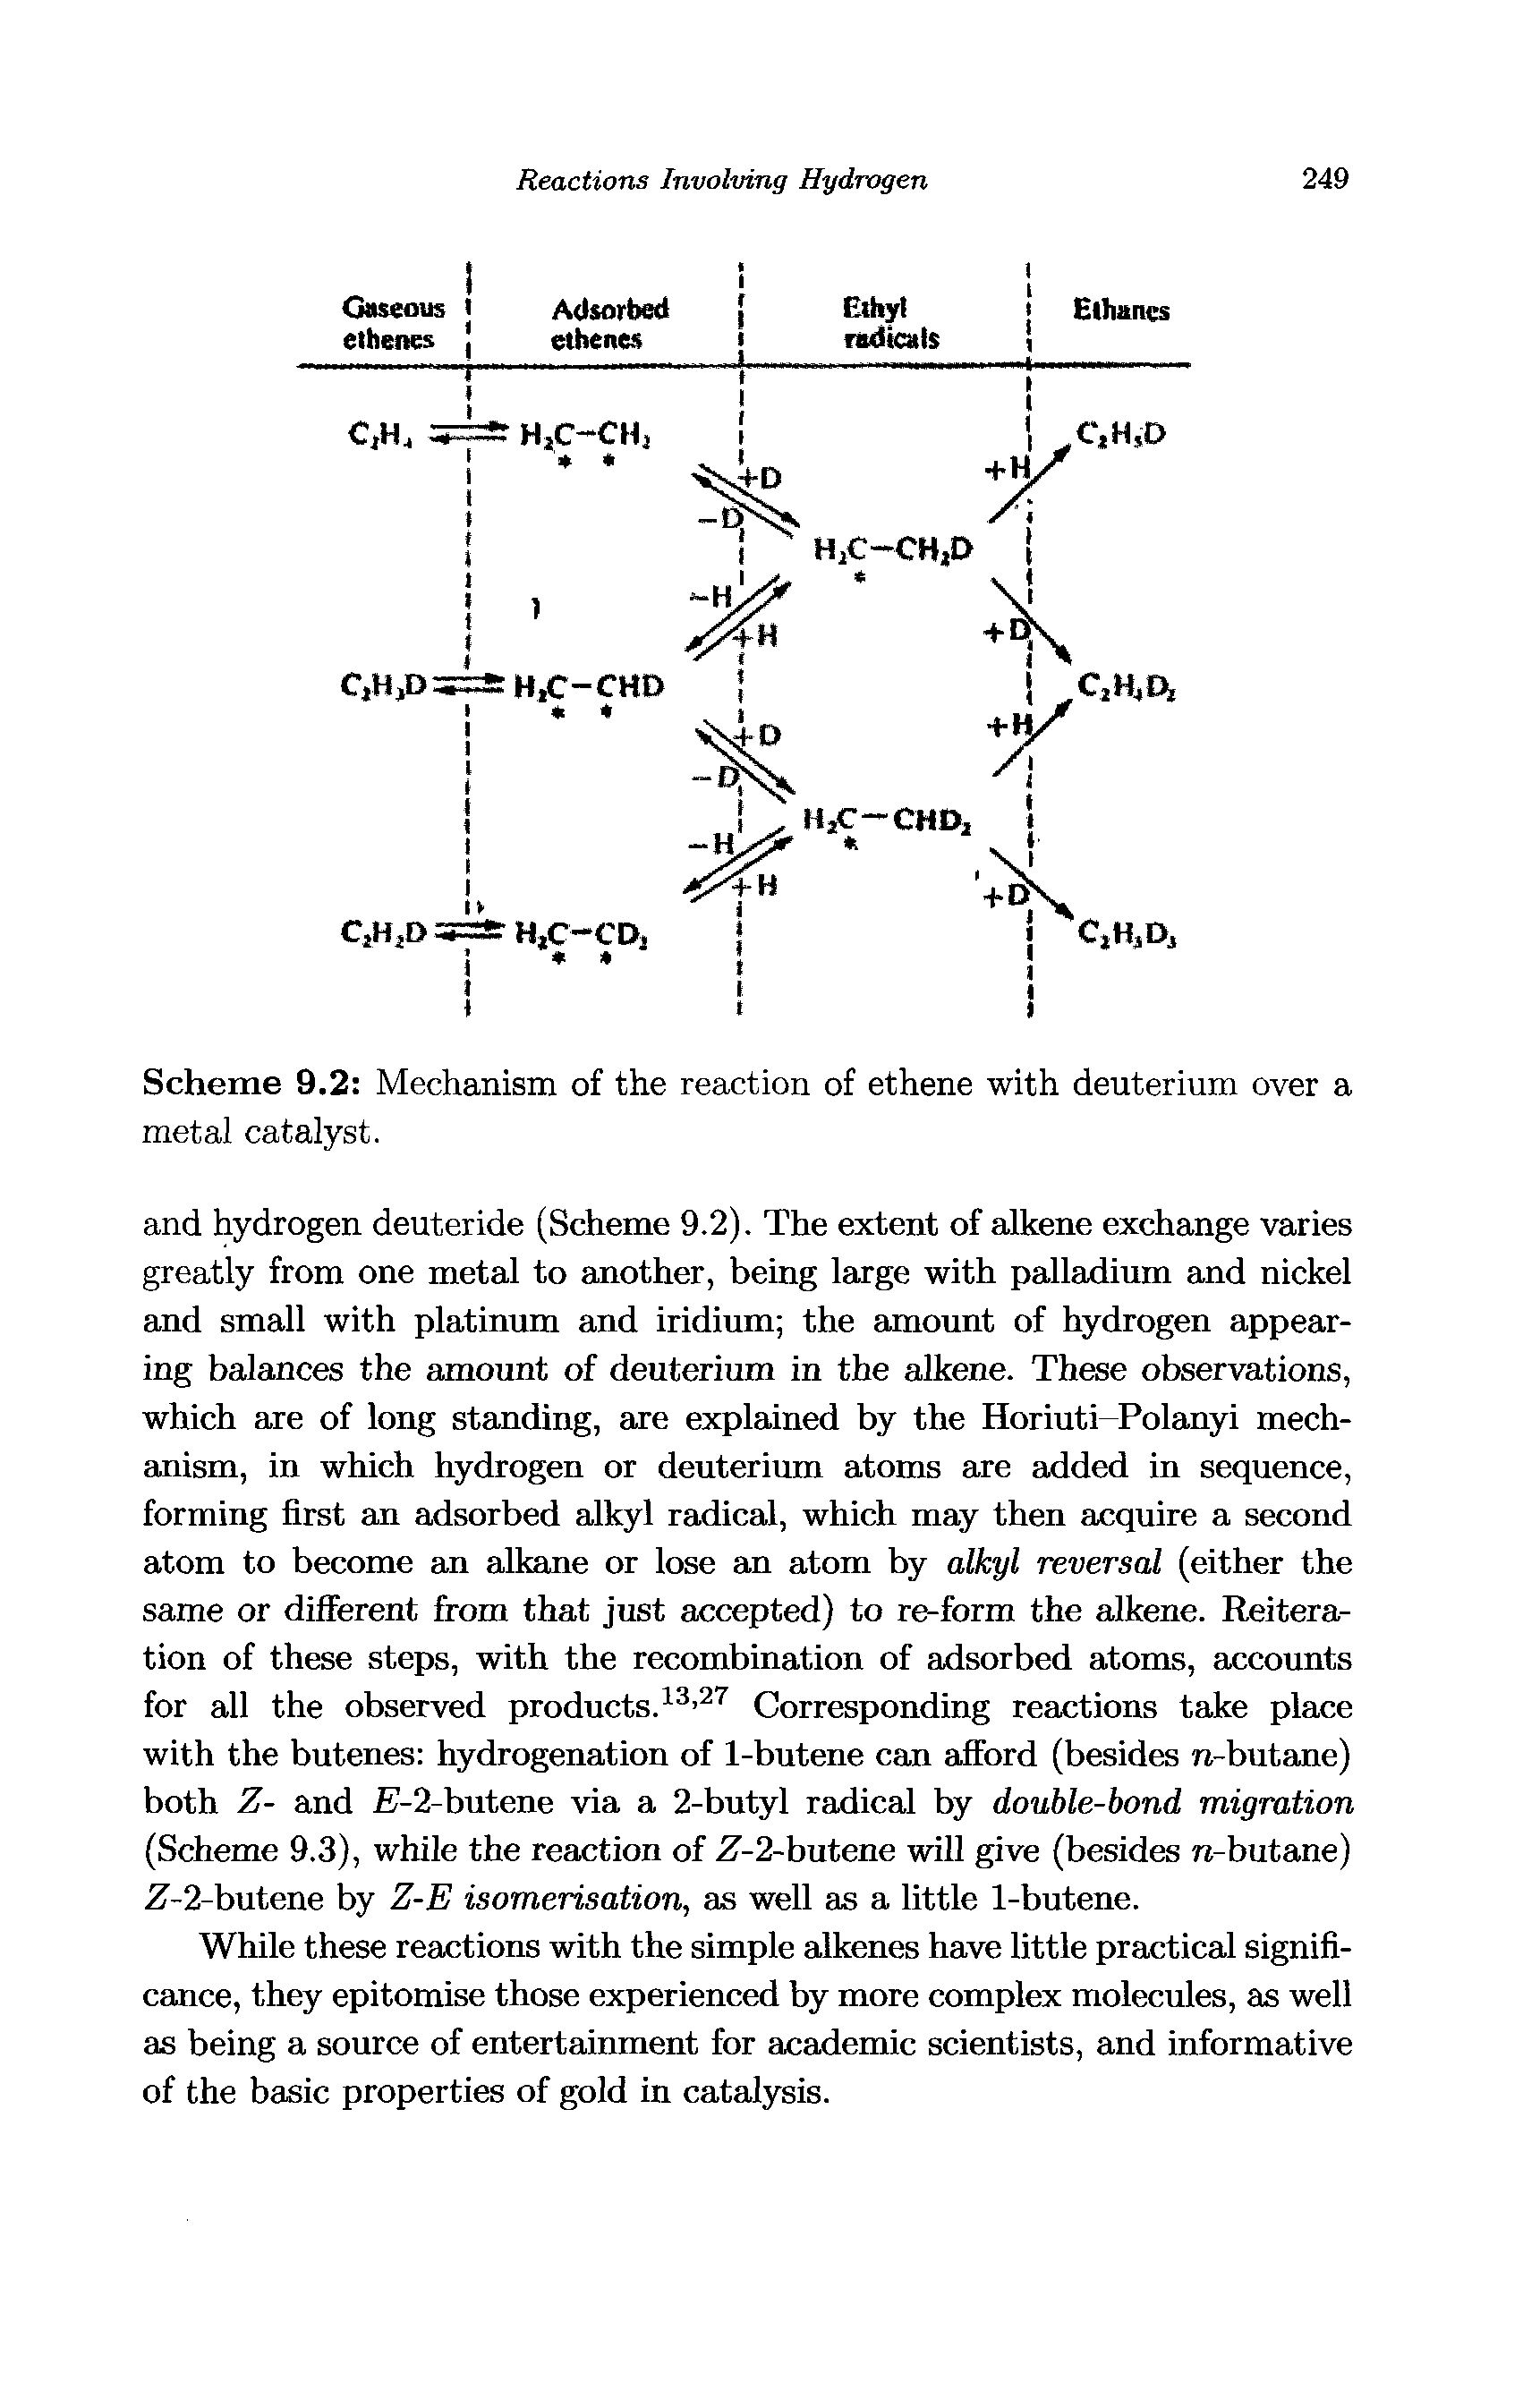 Scheme 9.2 Mechanism of the reaction of ethene with deuterium over a metal catalyst.